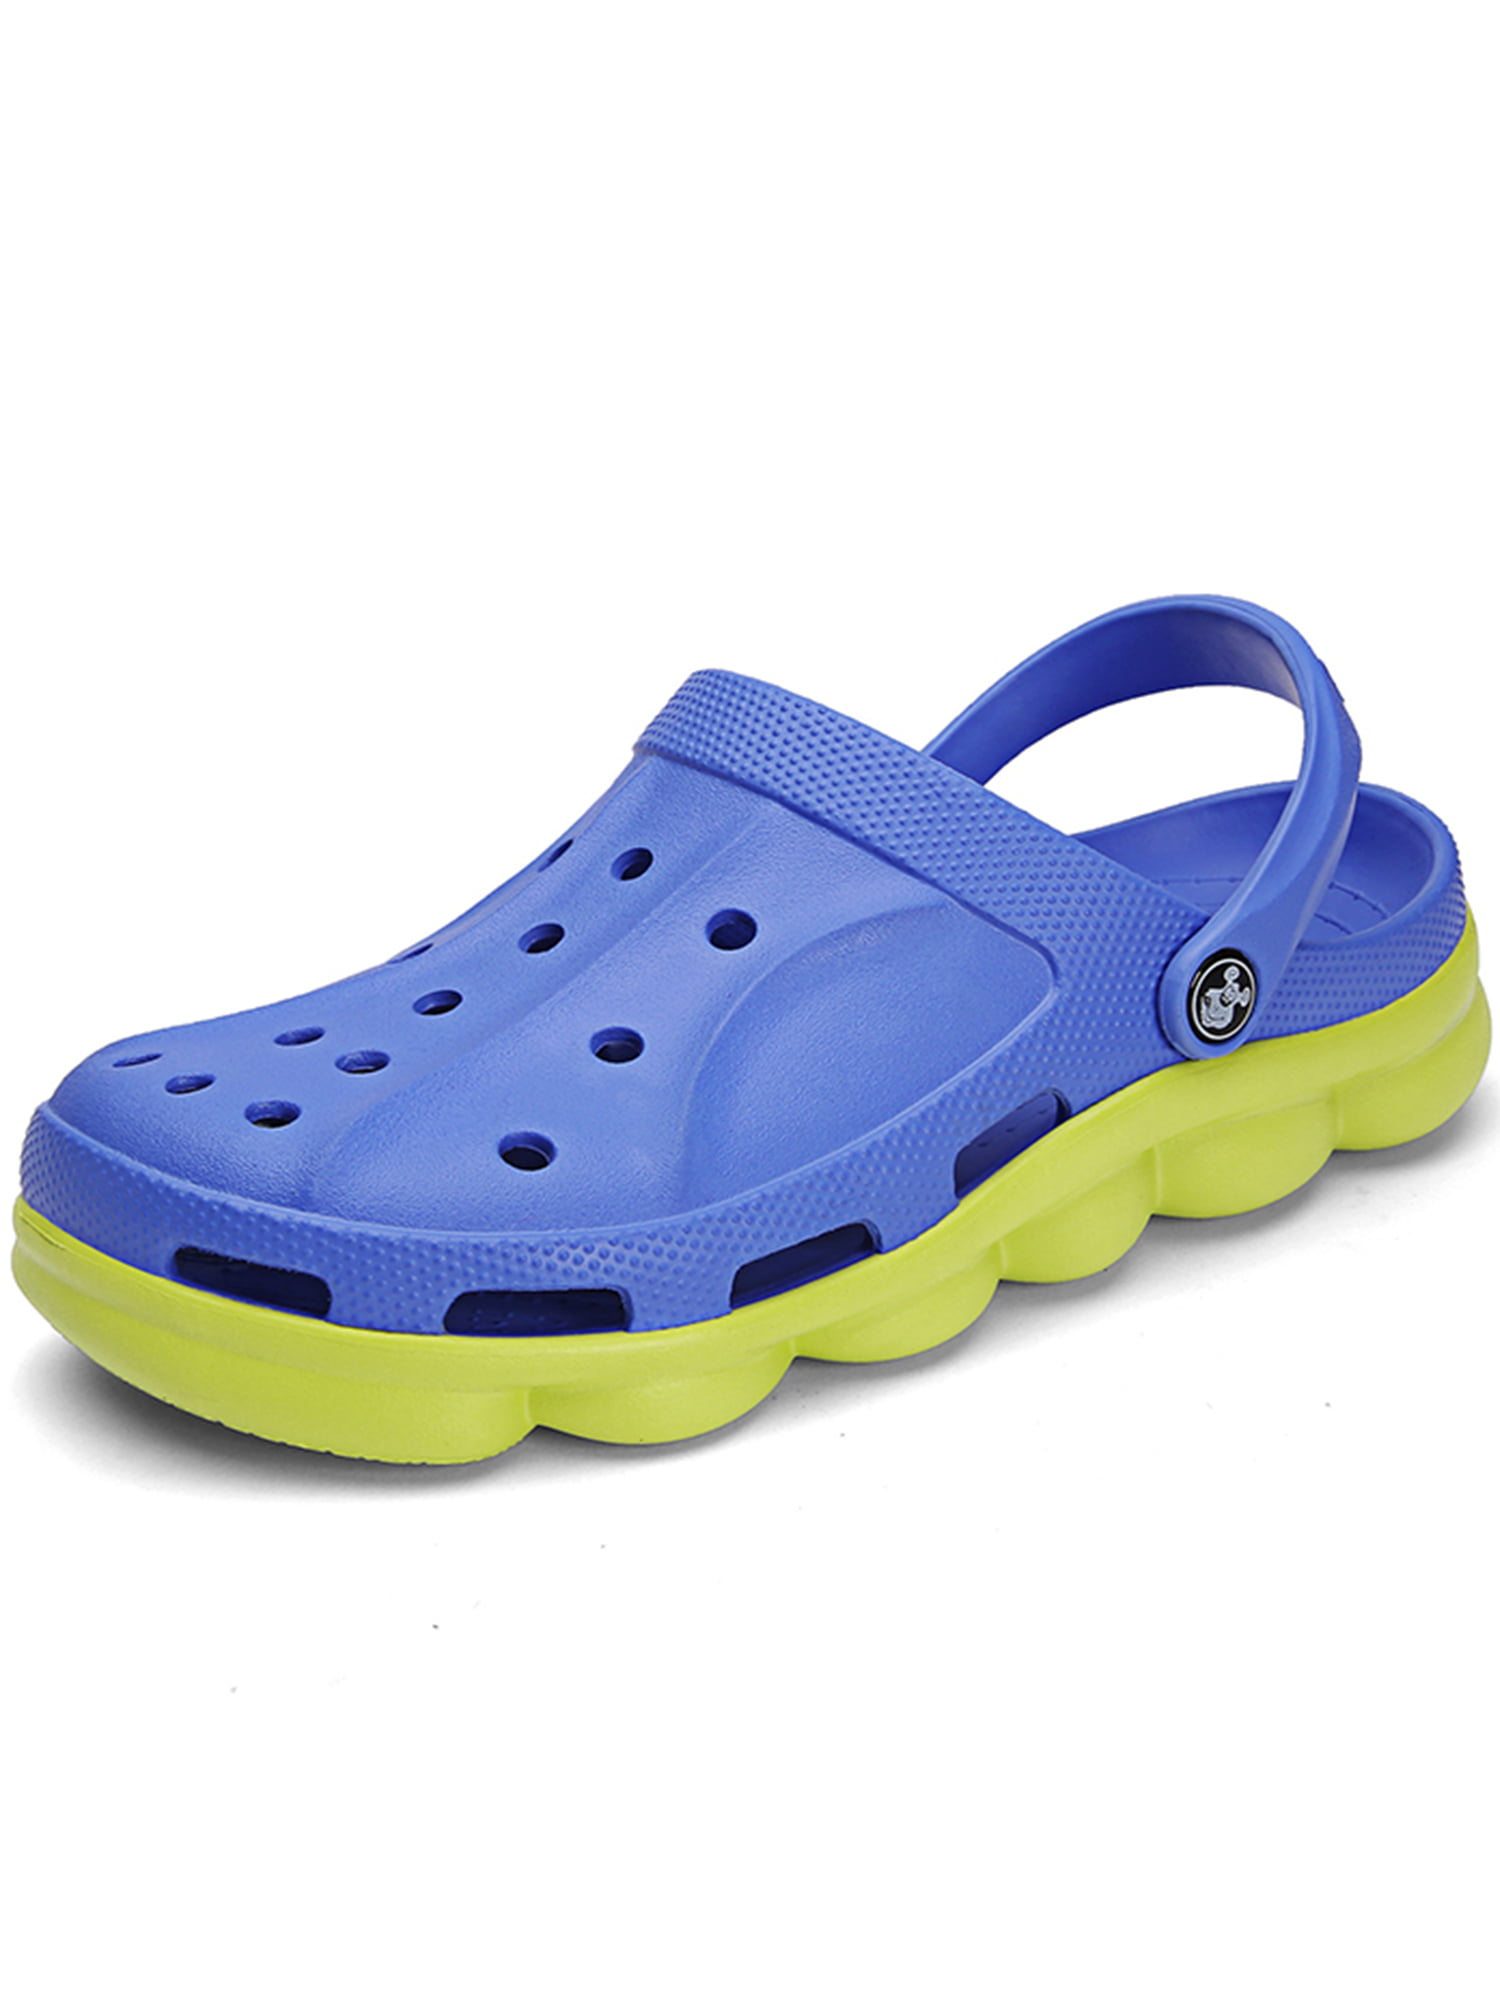 Mens Crocs Walking Summer Beach Mules Clogs Sports Trekking Sandals Shoes Size 